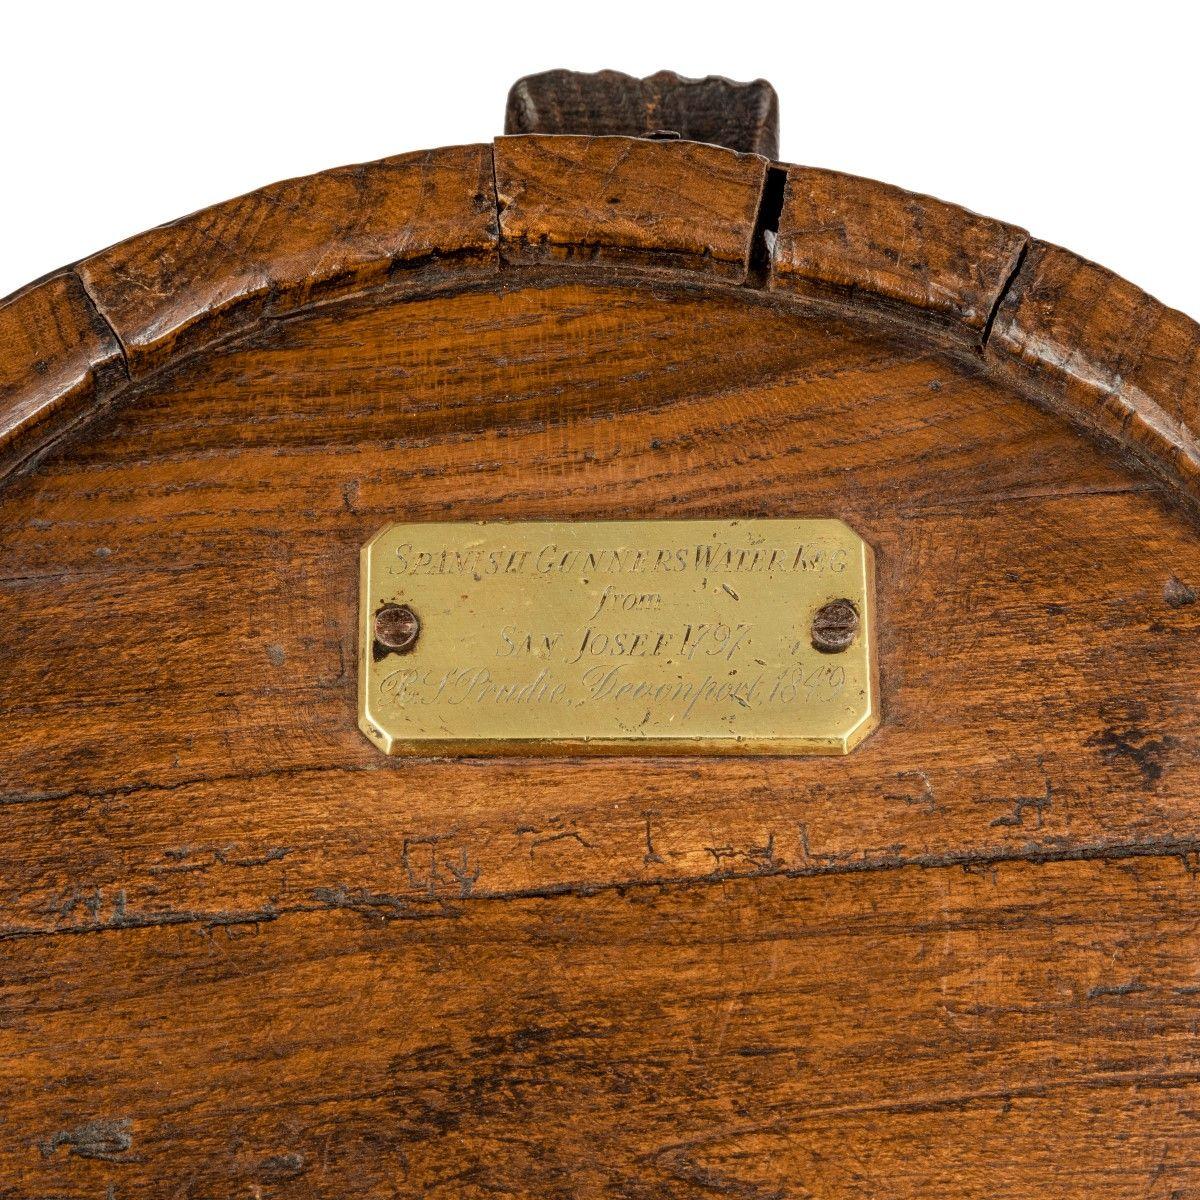 An oak water keg from San Josef captured at the Battle of Cape St. Vincent